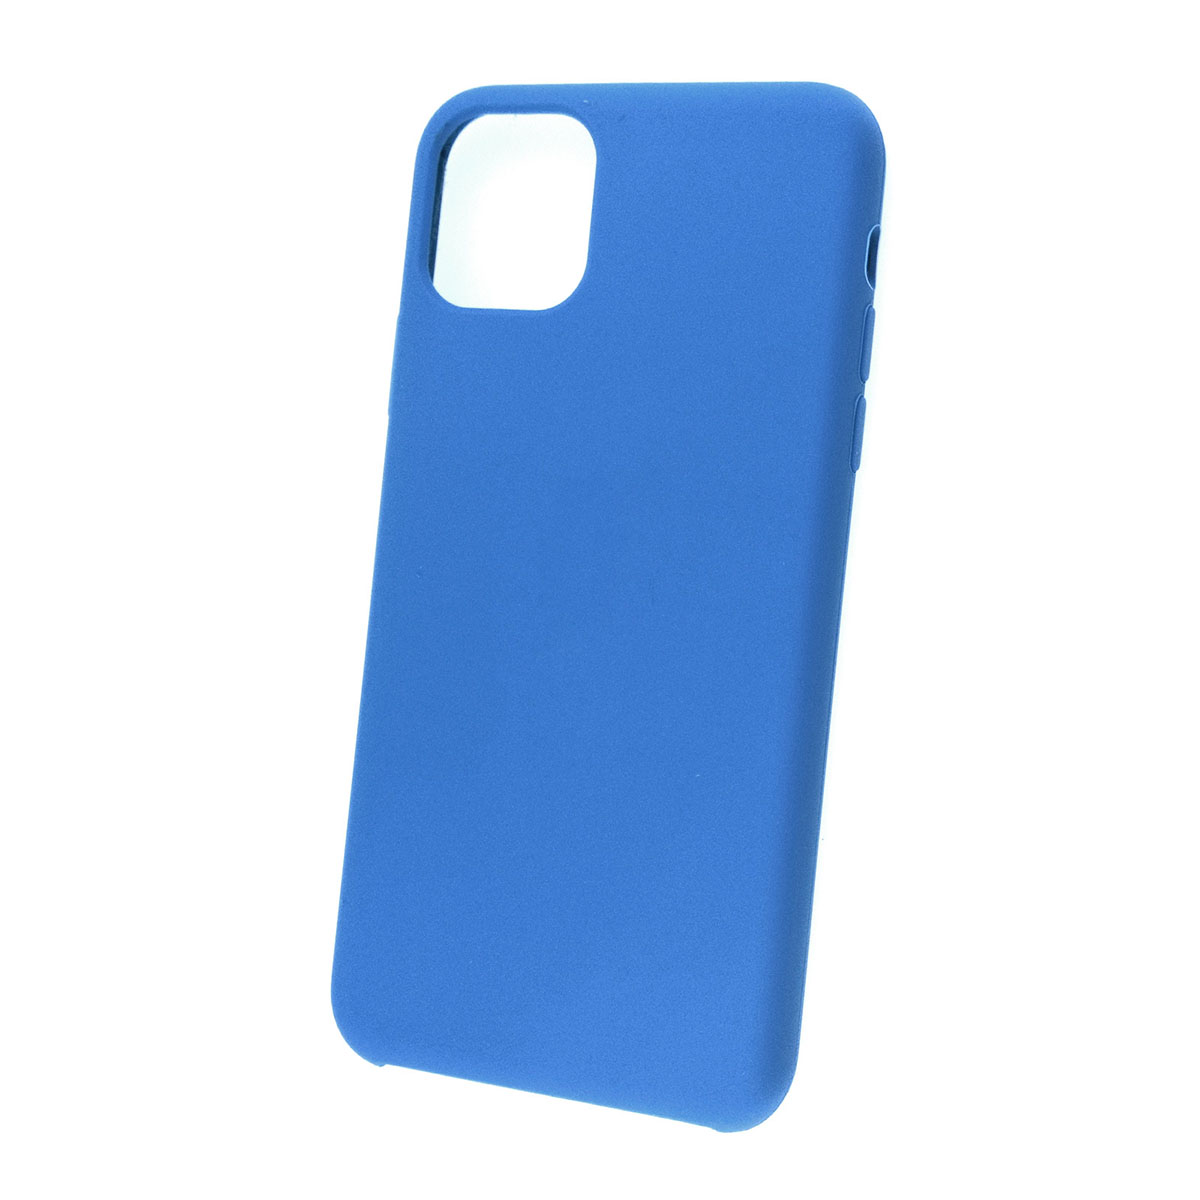 Чехол накладка Silicon Case для APPLE iPhone 11 Pro MAX 2019, силикон, бархат, цвет голубой.